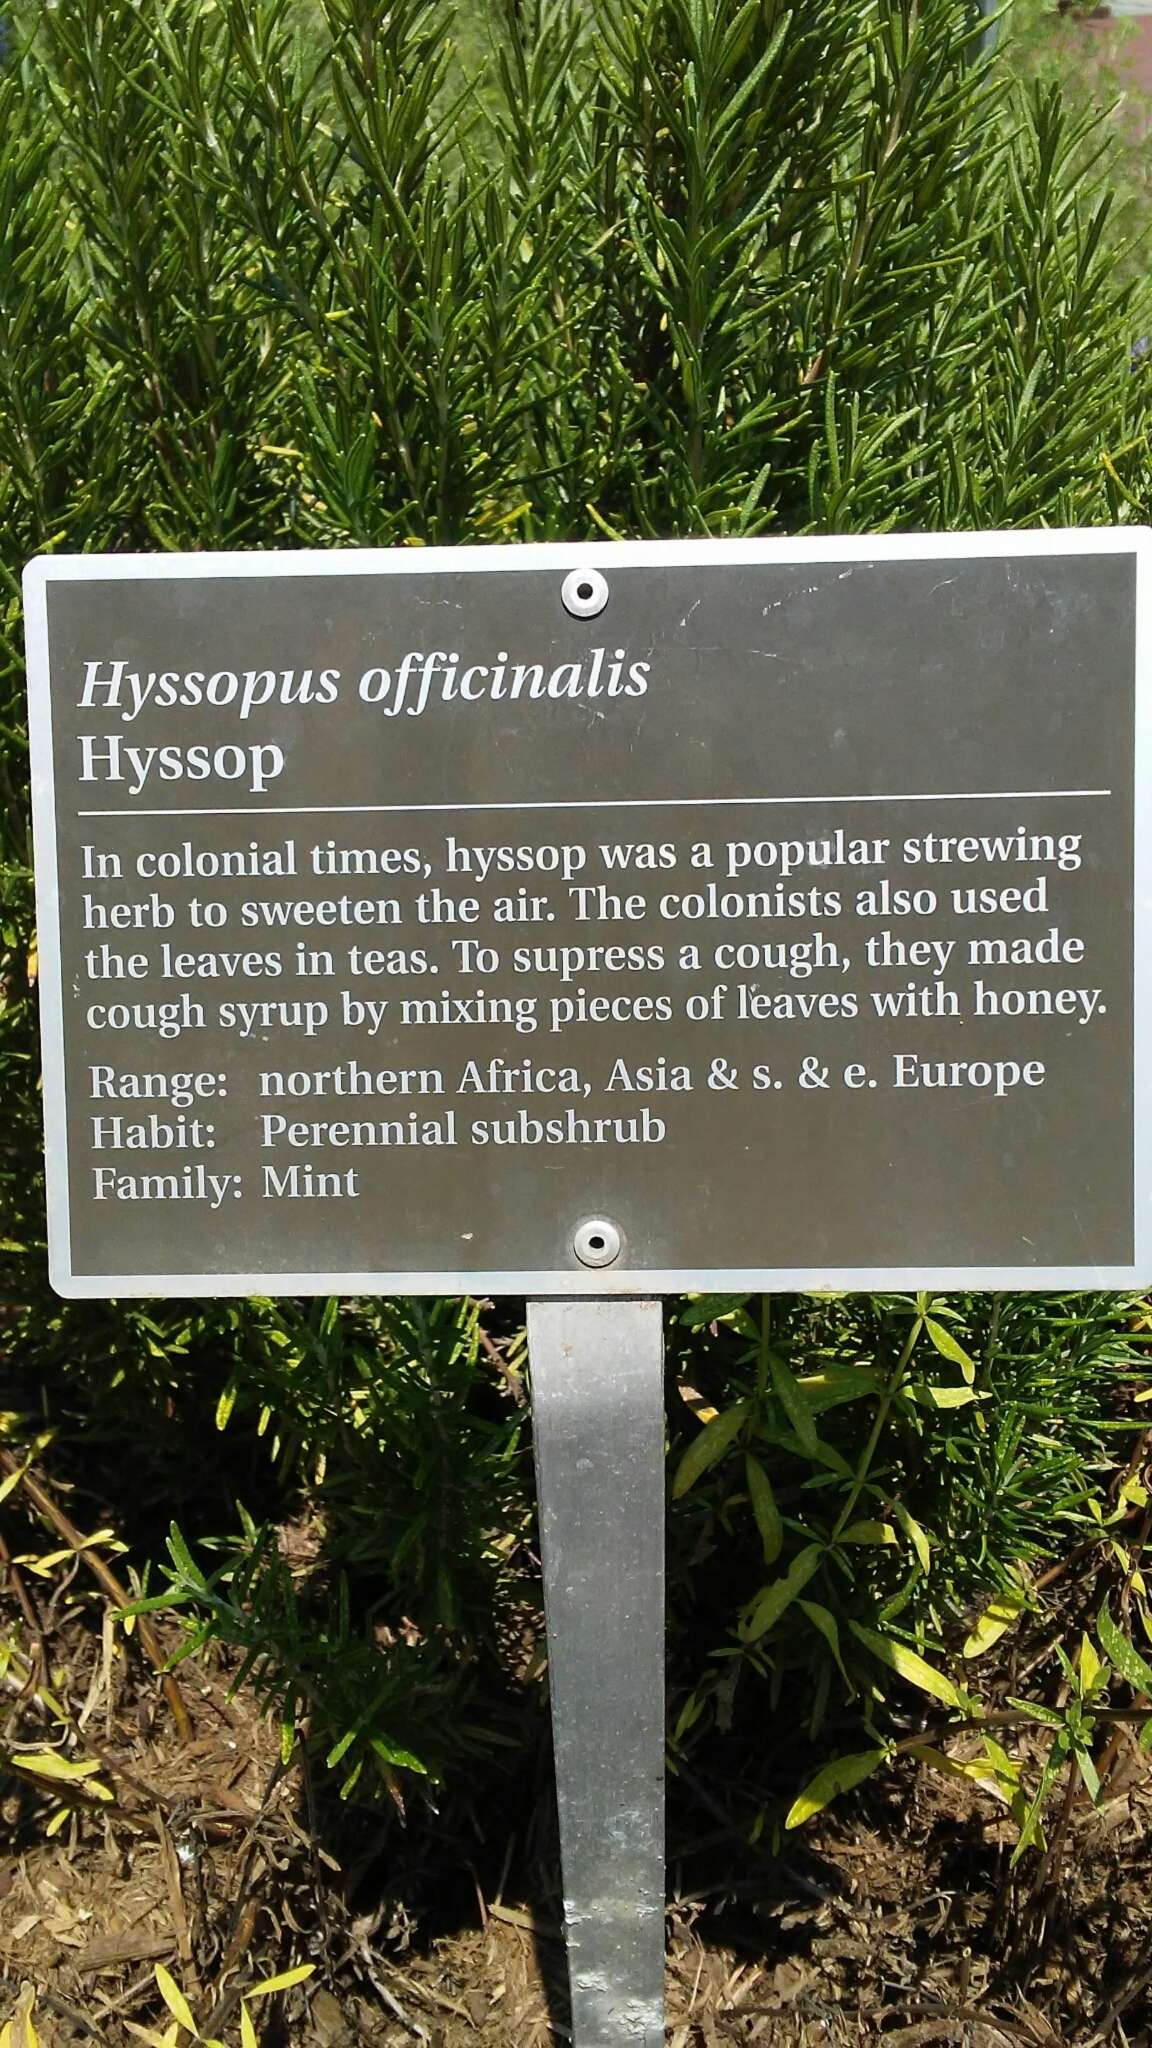 Image of hyssopus